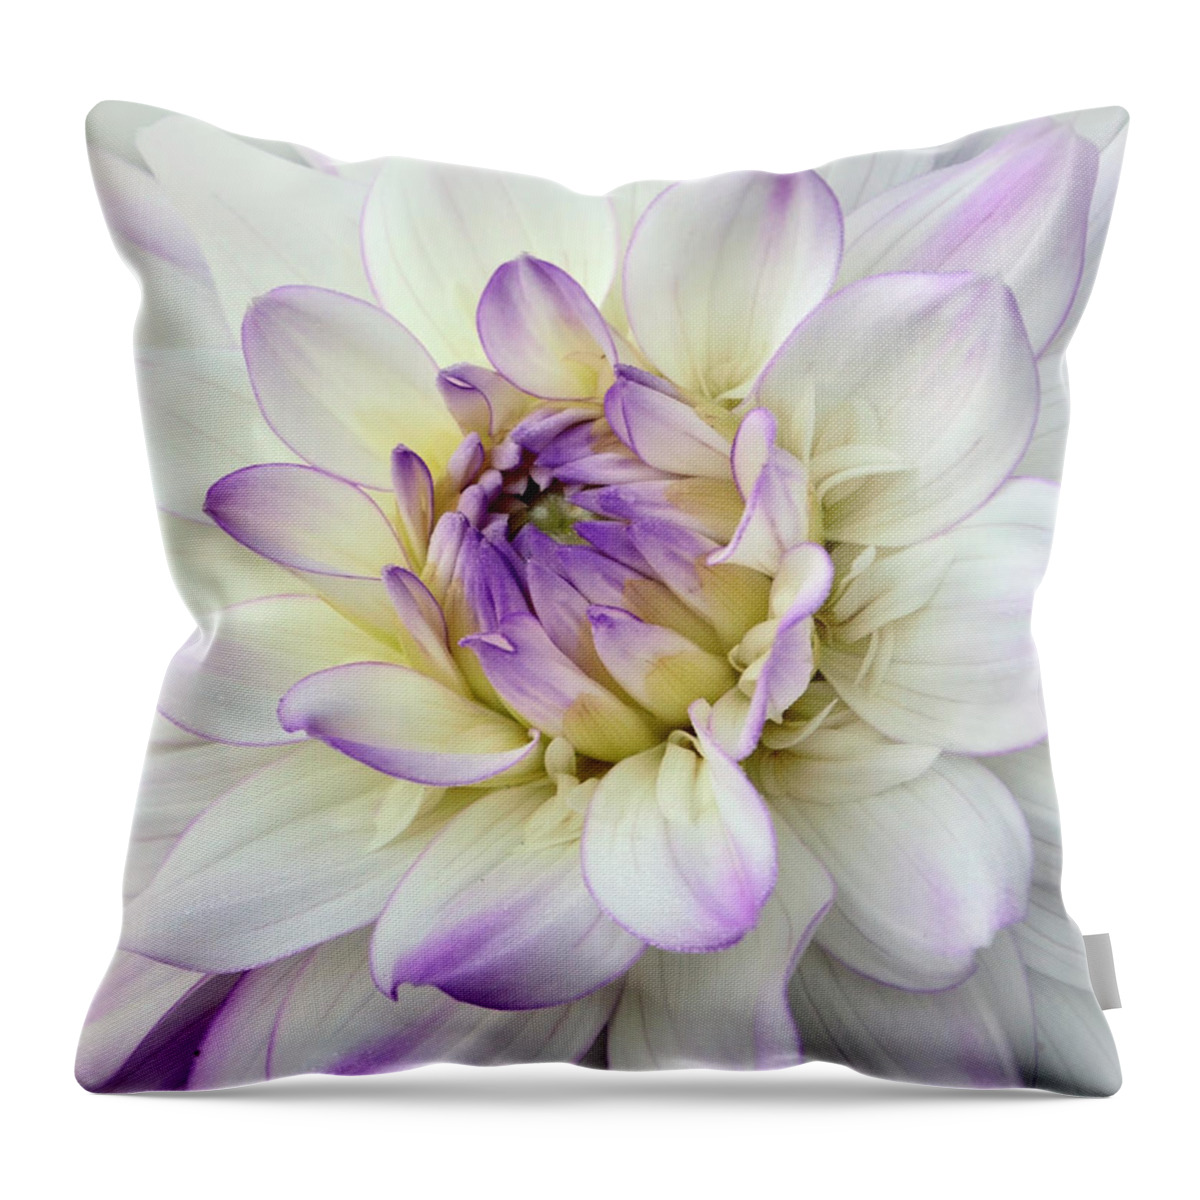 Purple Dahlia Throw Pillow featuring the photograph White and Purple Dahlia by Ann Bridges